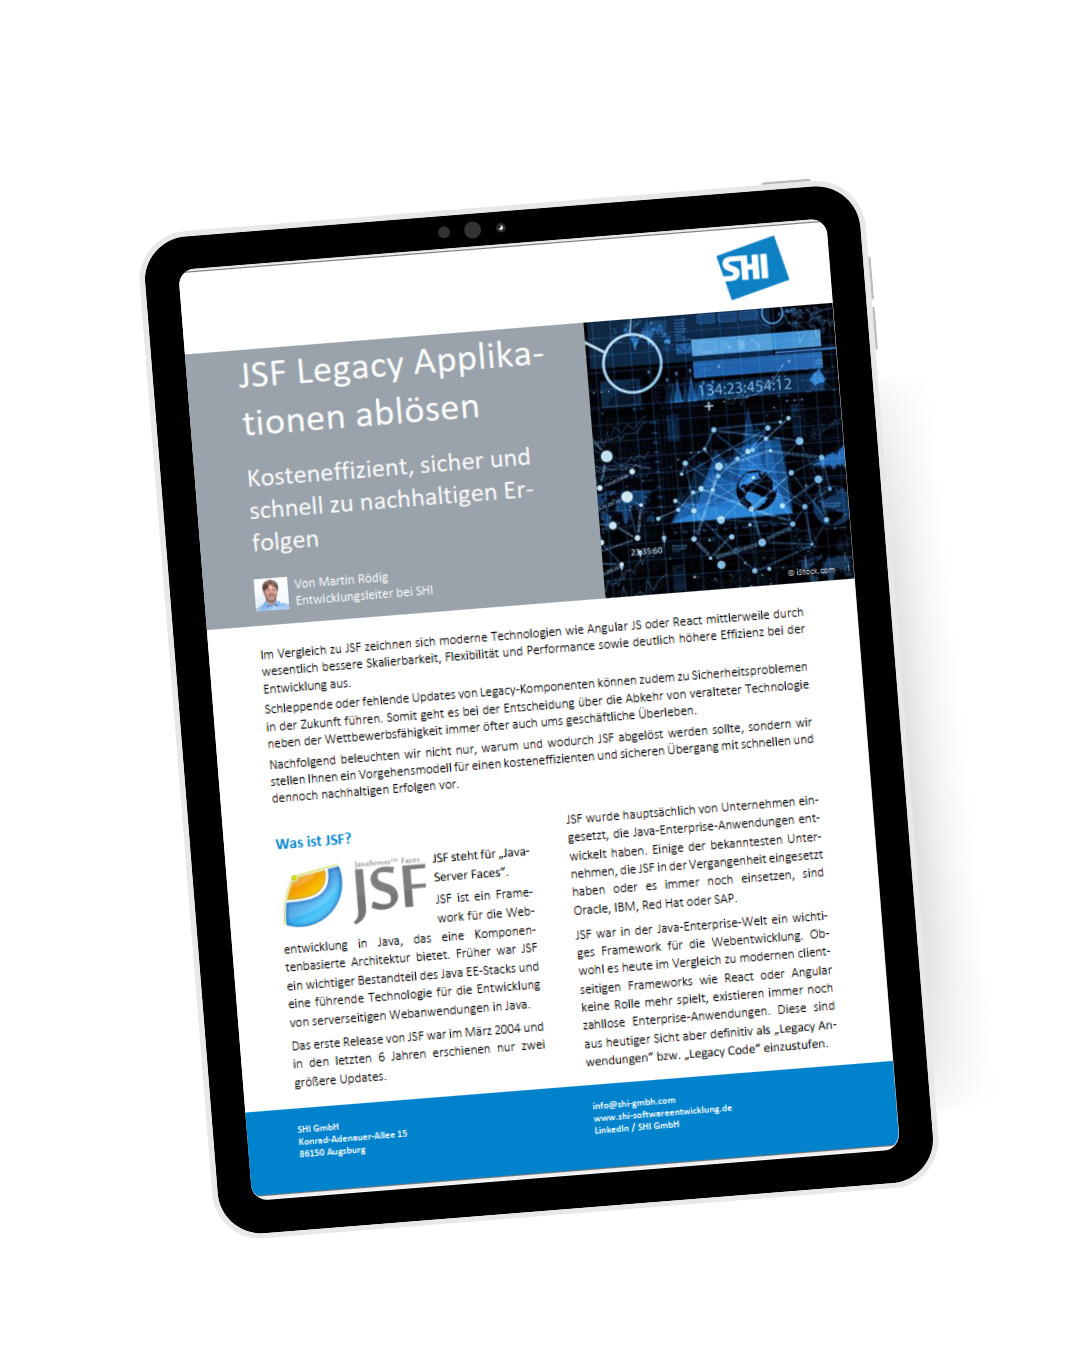 Whitepaper: JSF Legacy Applikationen ablösen